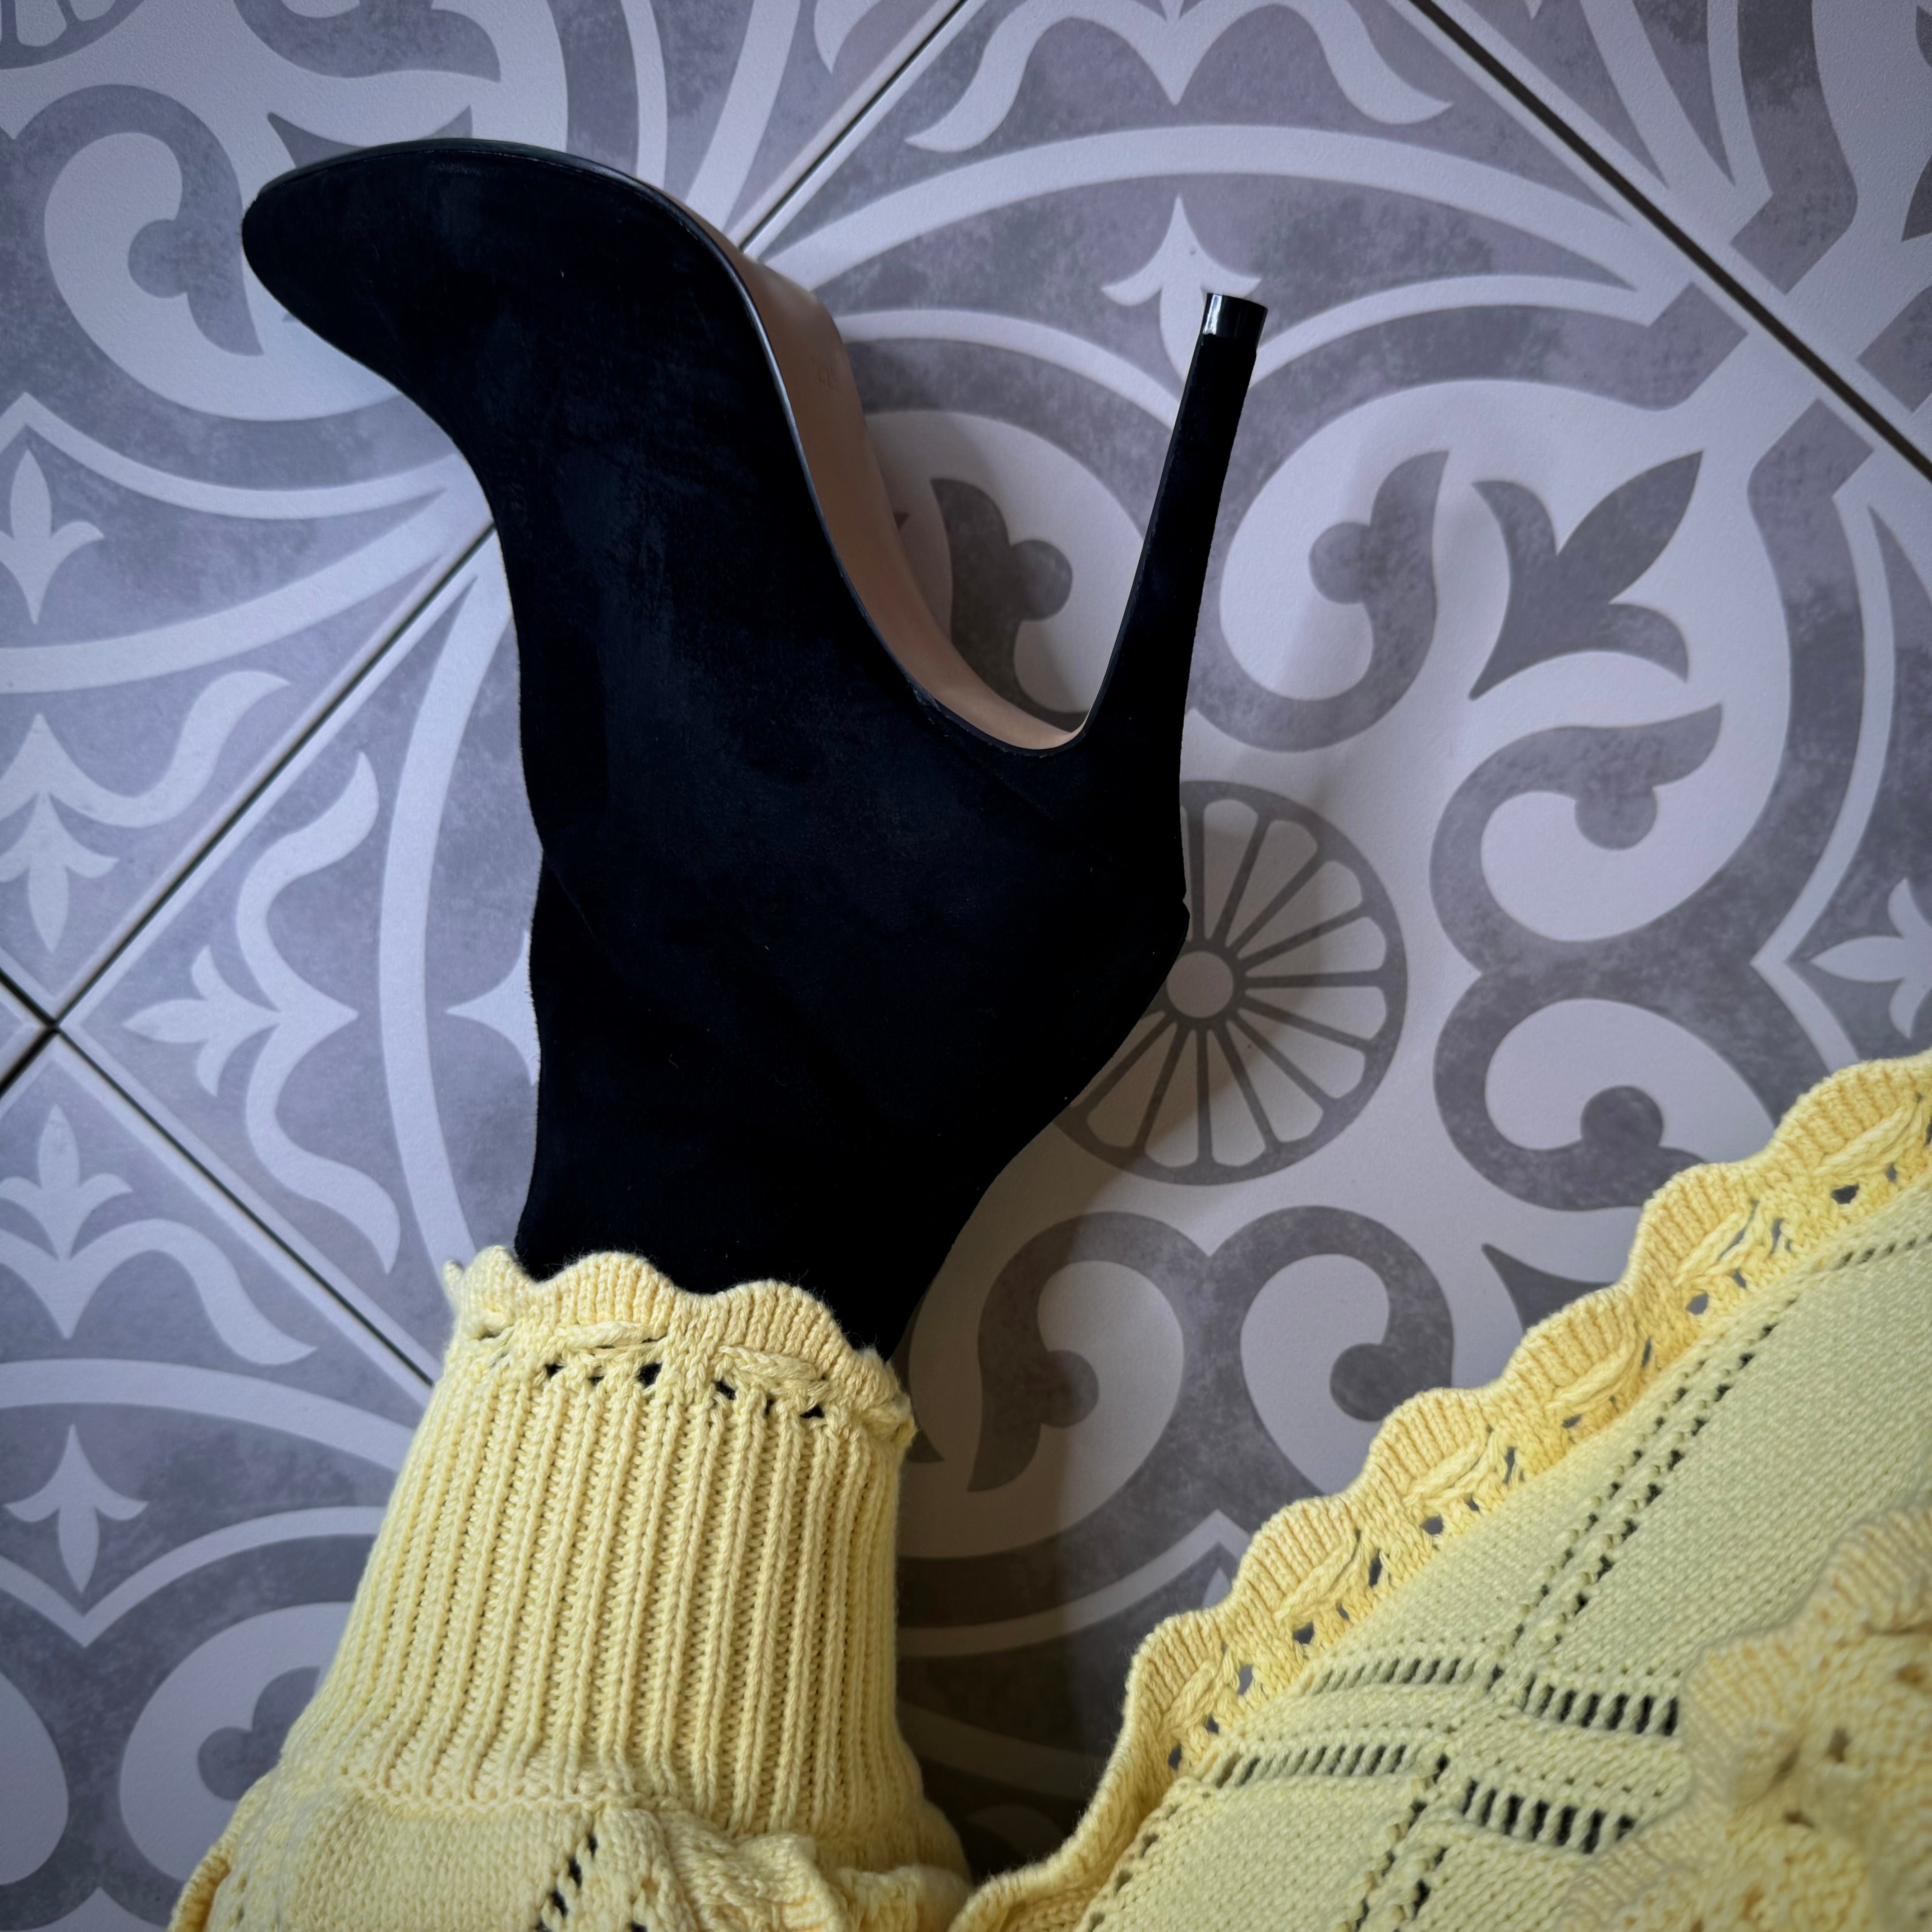 *UK size 13 - OSCAR - beige suede, 9cm heels